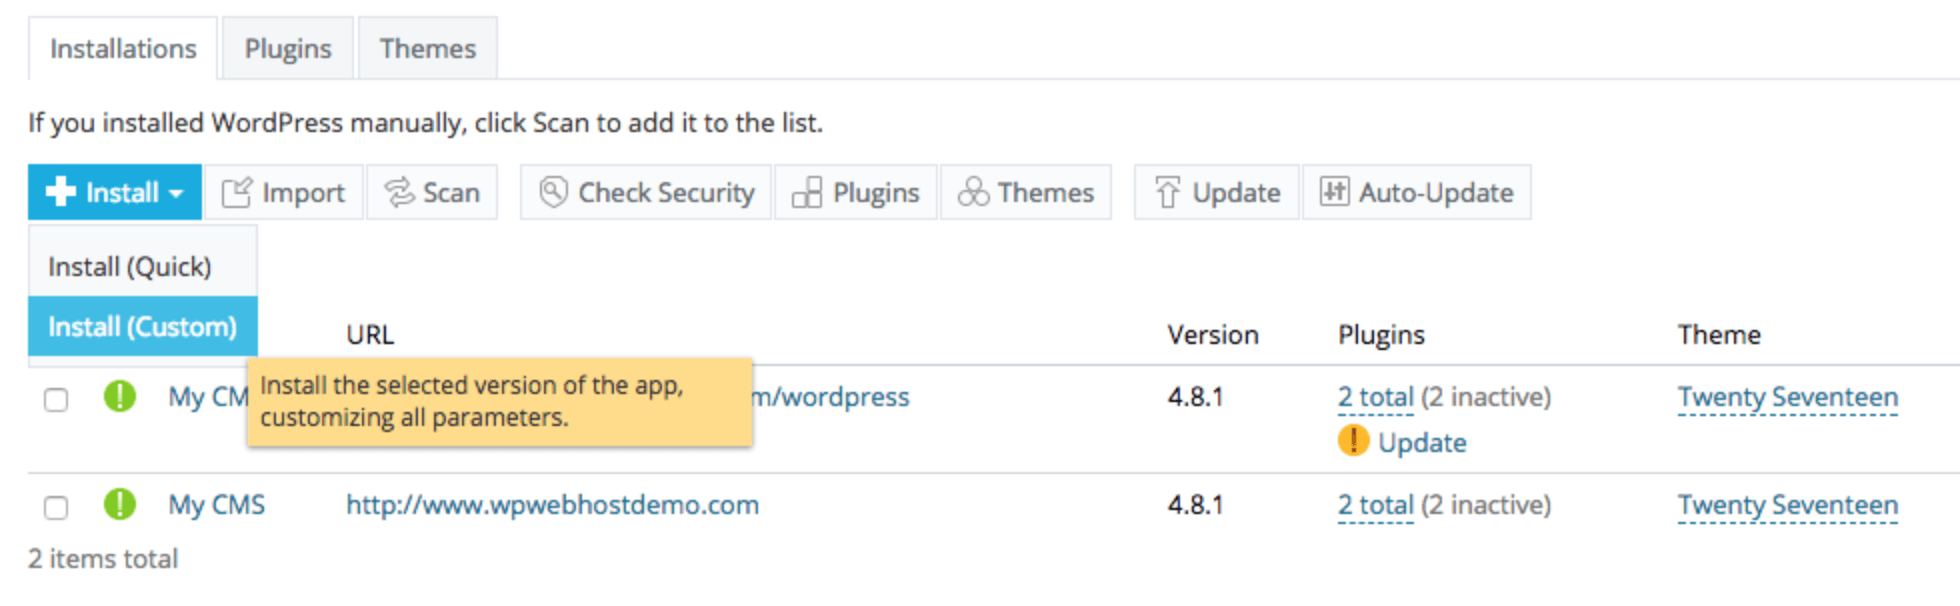 Installing WordPress using a one-click option in the WPWebHost dashboard.